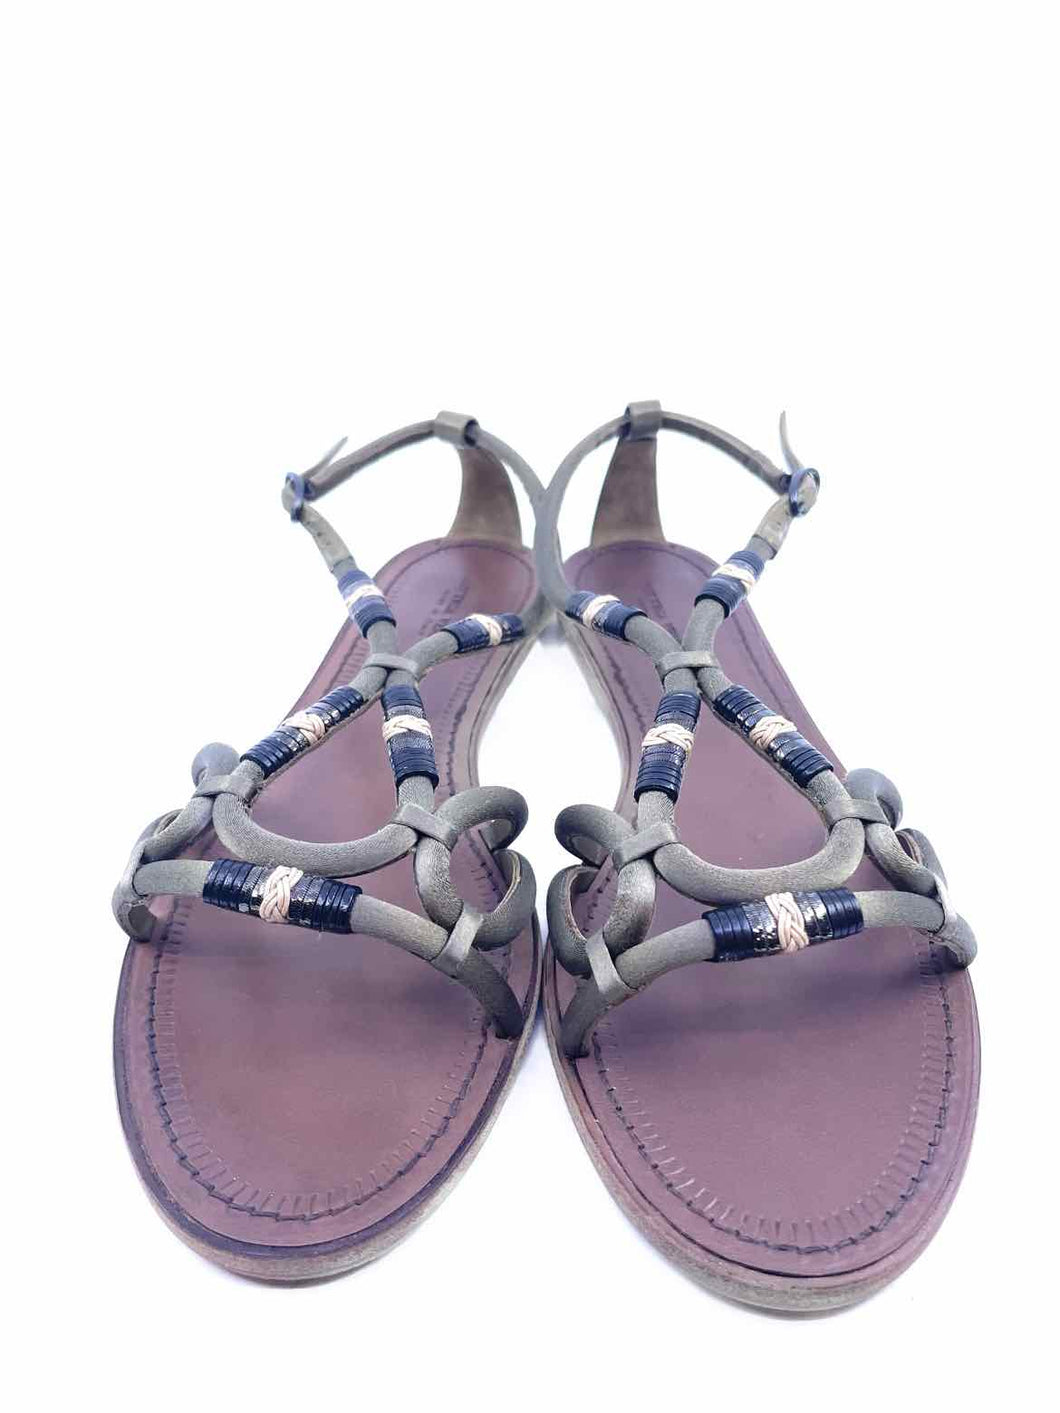 BOTTEGA VENETA Size 7.5 Olive Satin Solid Sandals